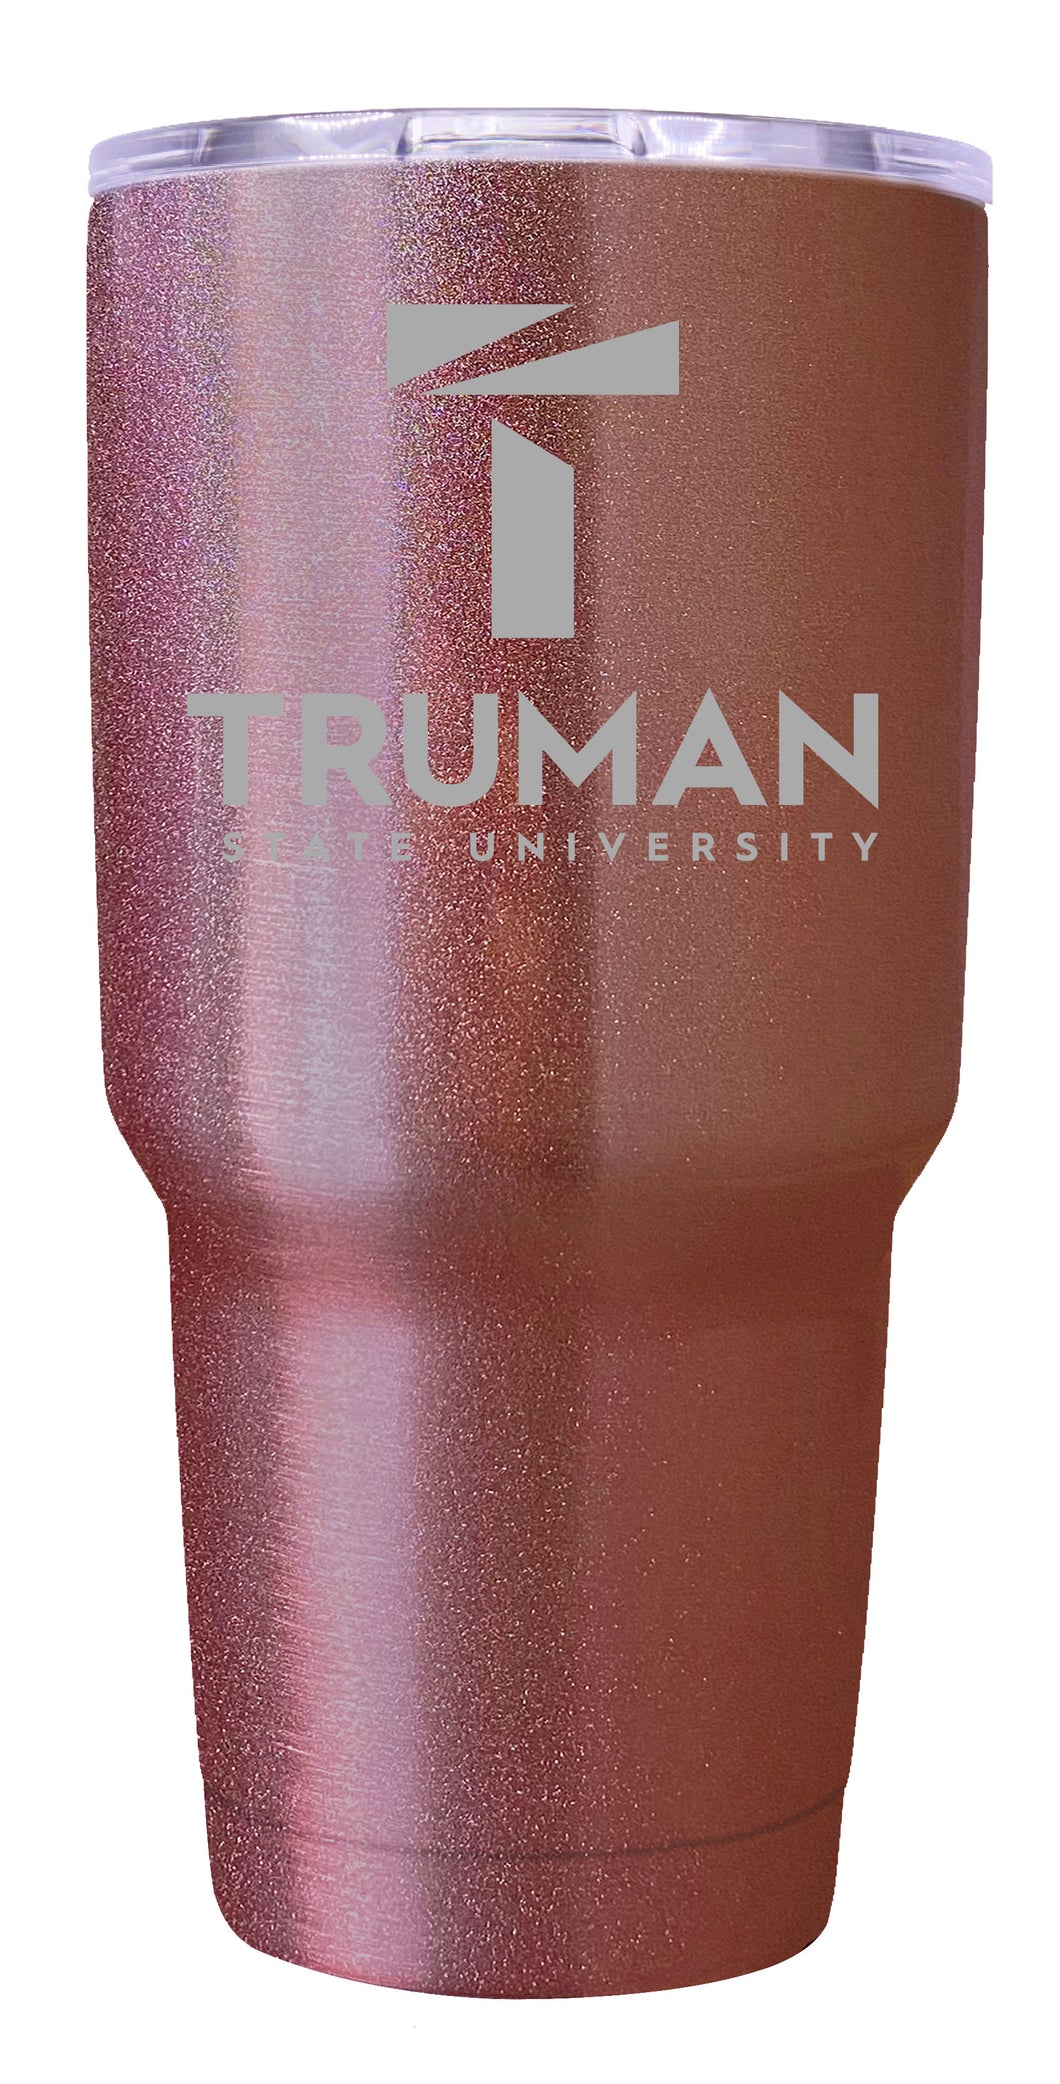 Truman State University Premium Laser Engraved Tumbler - 24oz Stainless Steel Insulated Mug Rose Gold